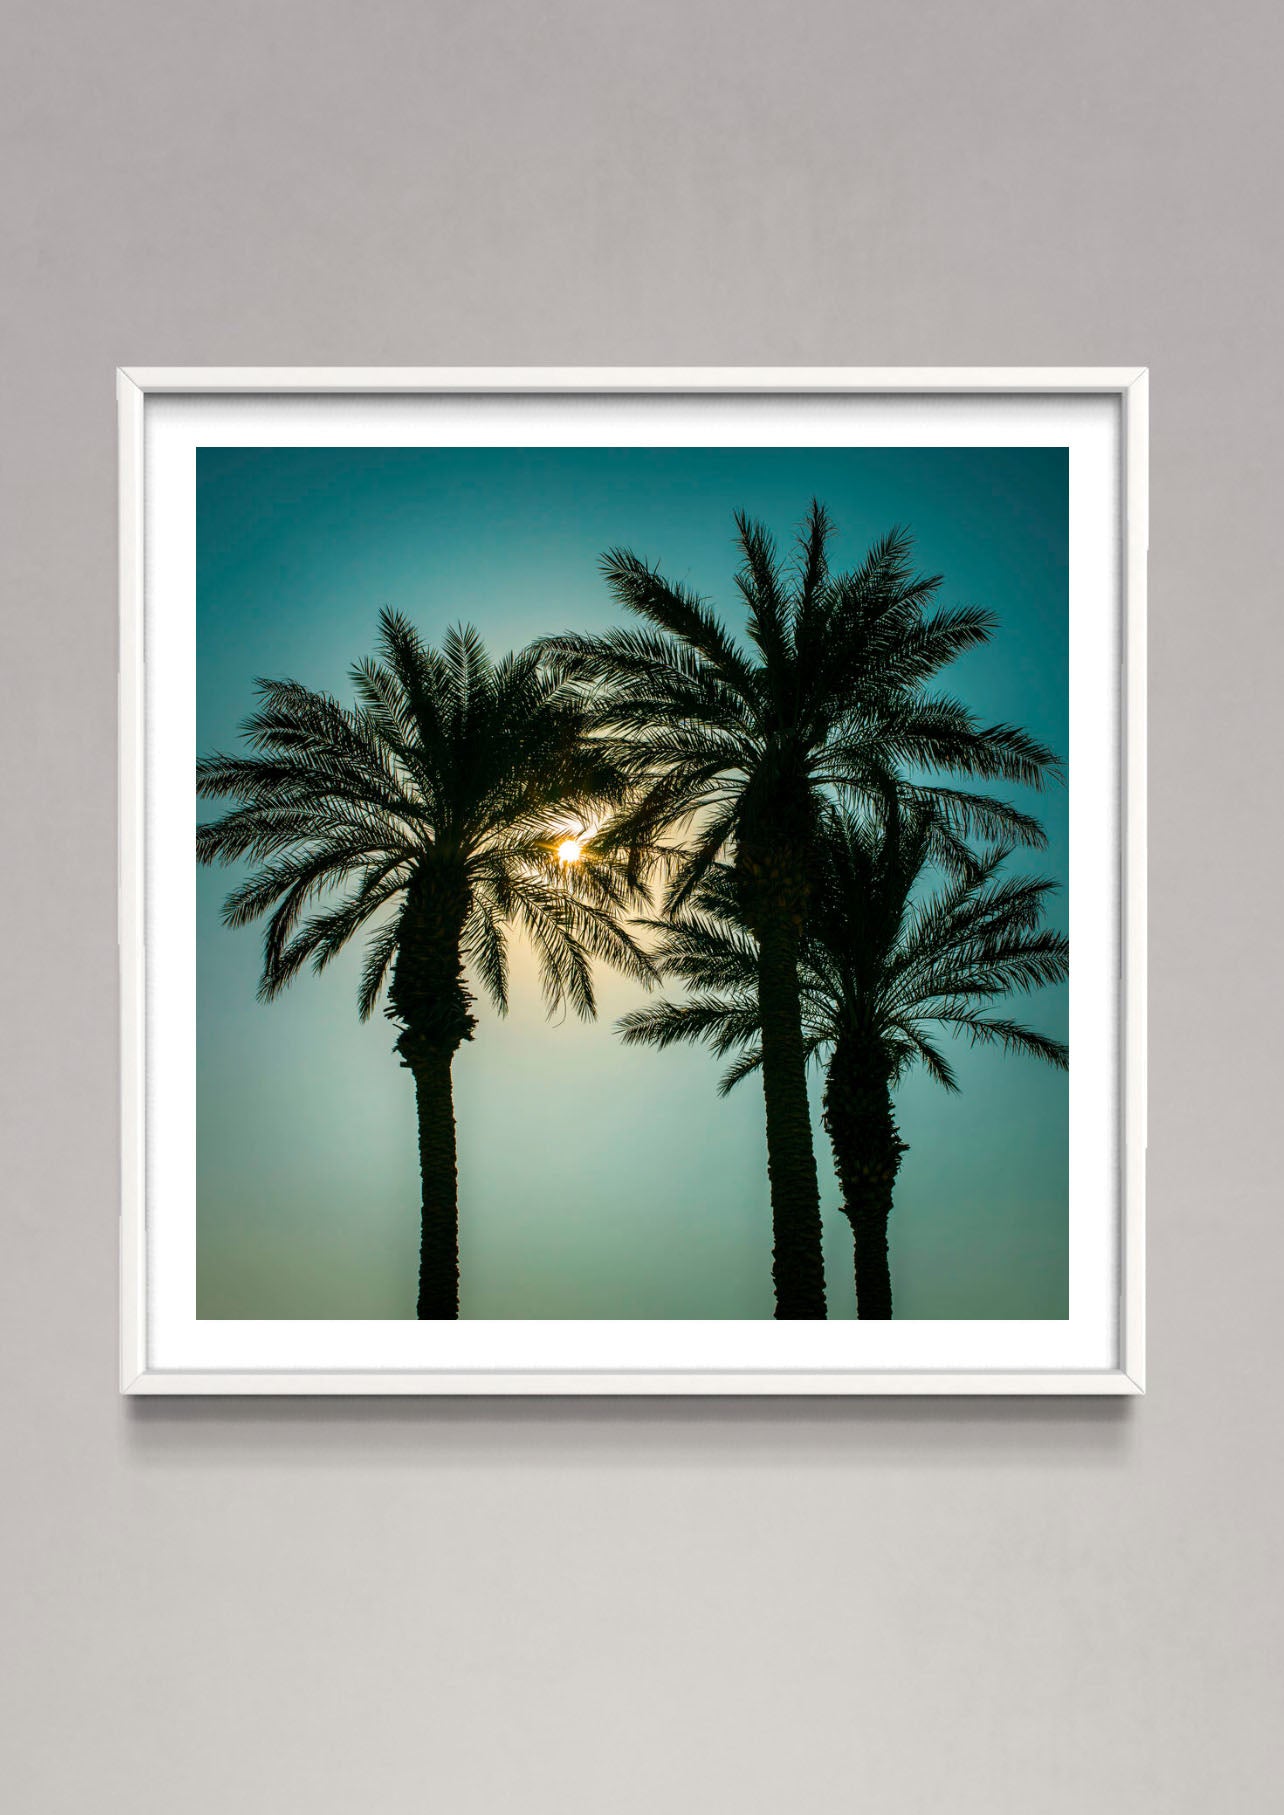 Silhouette of Palm trees, Negev desert, Israel